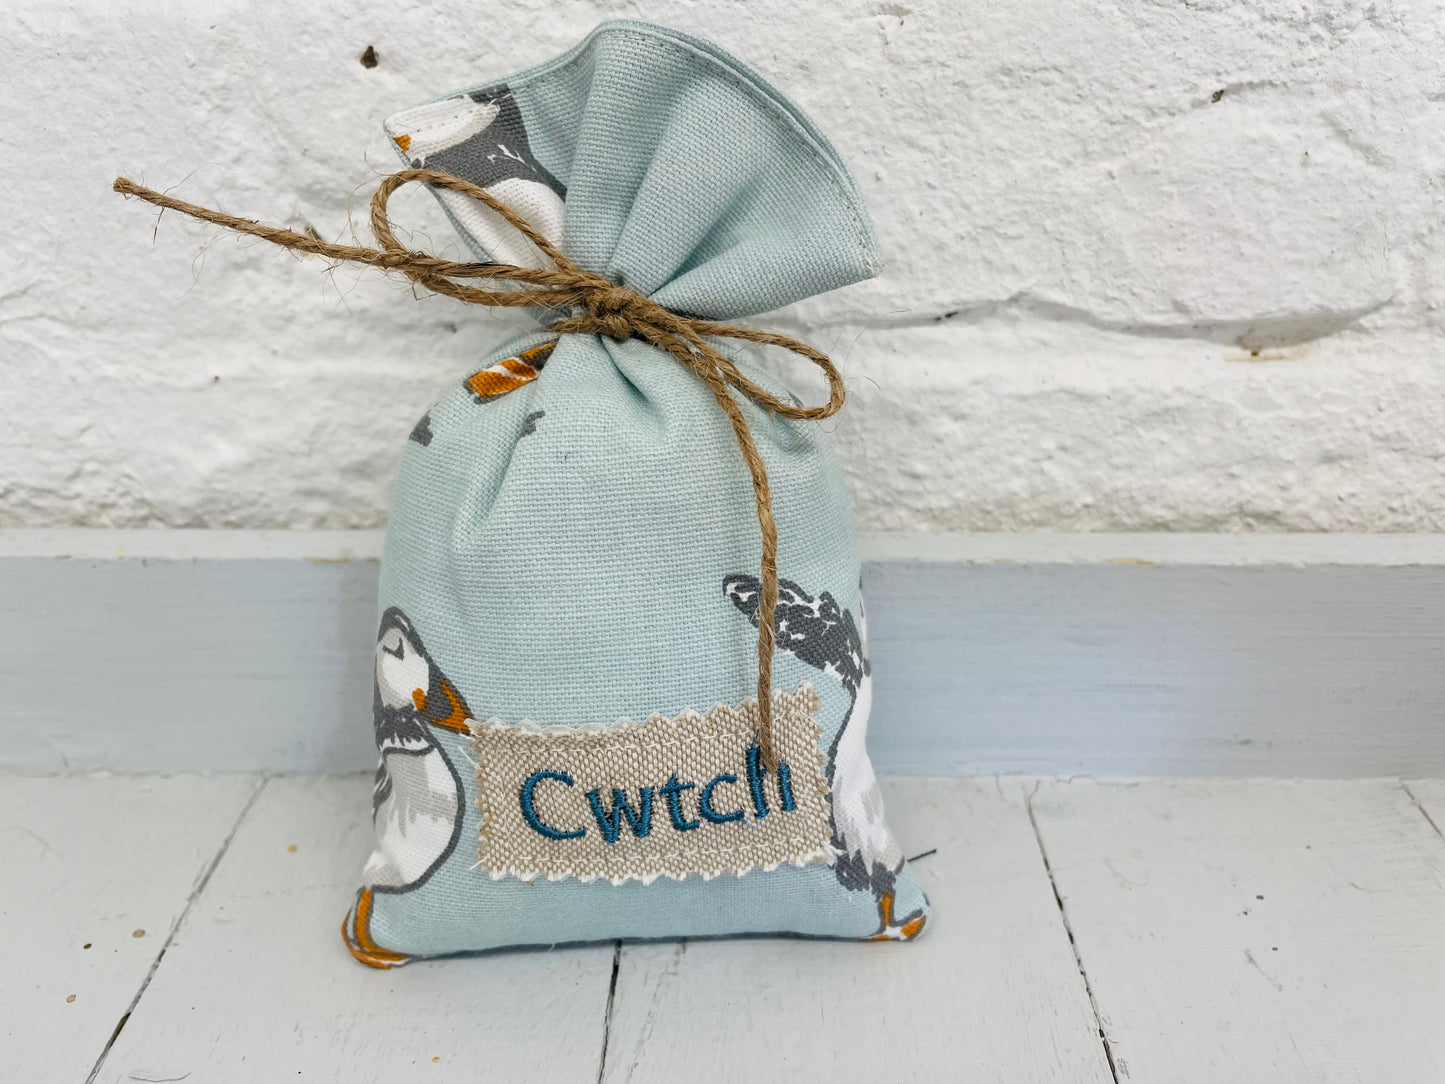 Cwtch Lavender Bag - Nautical fabrics